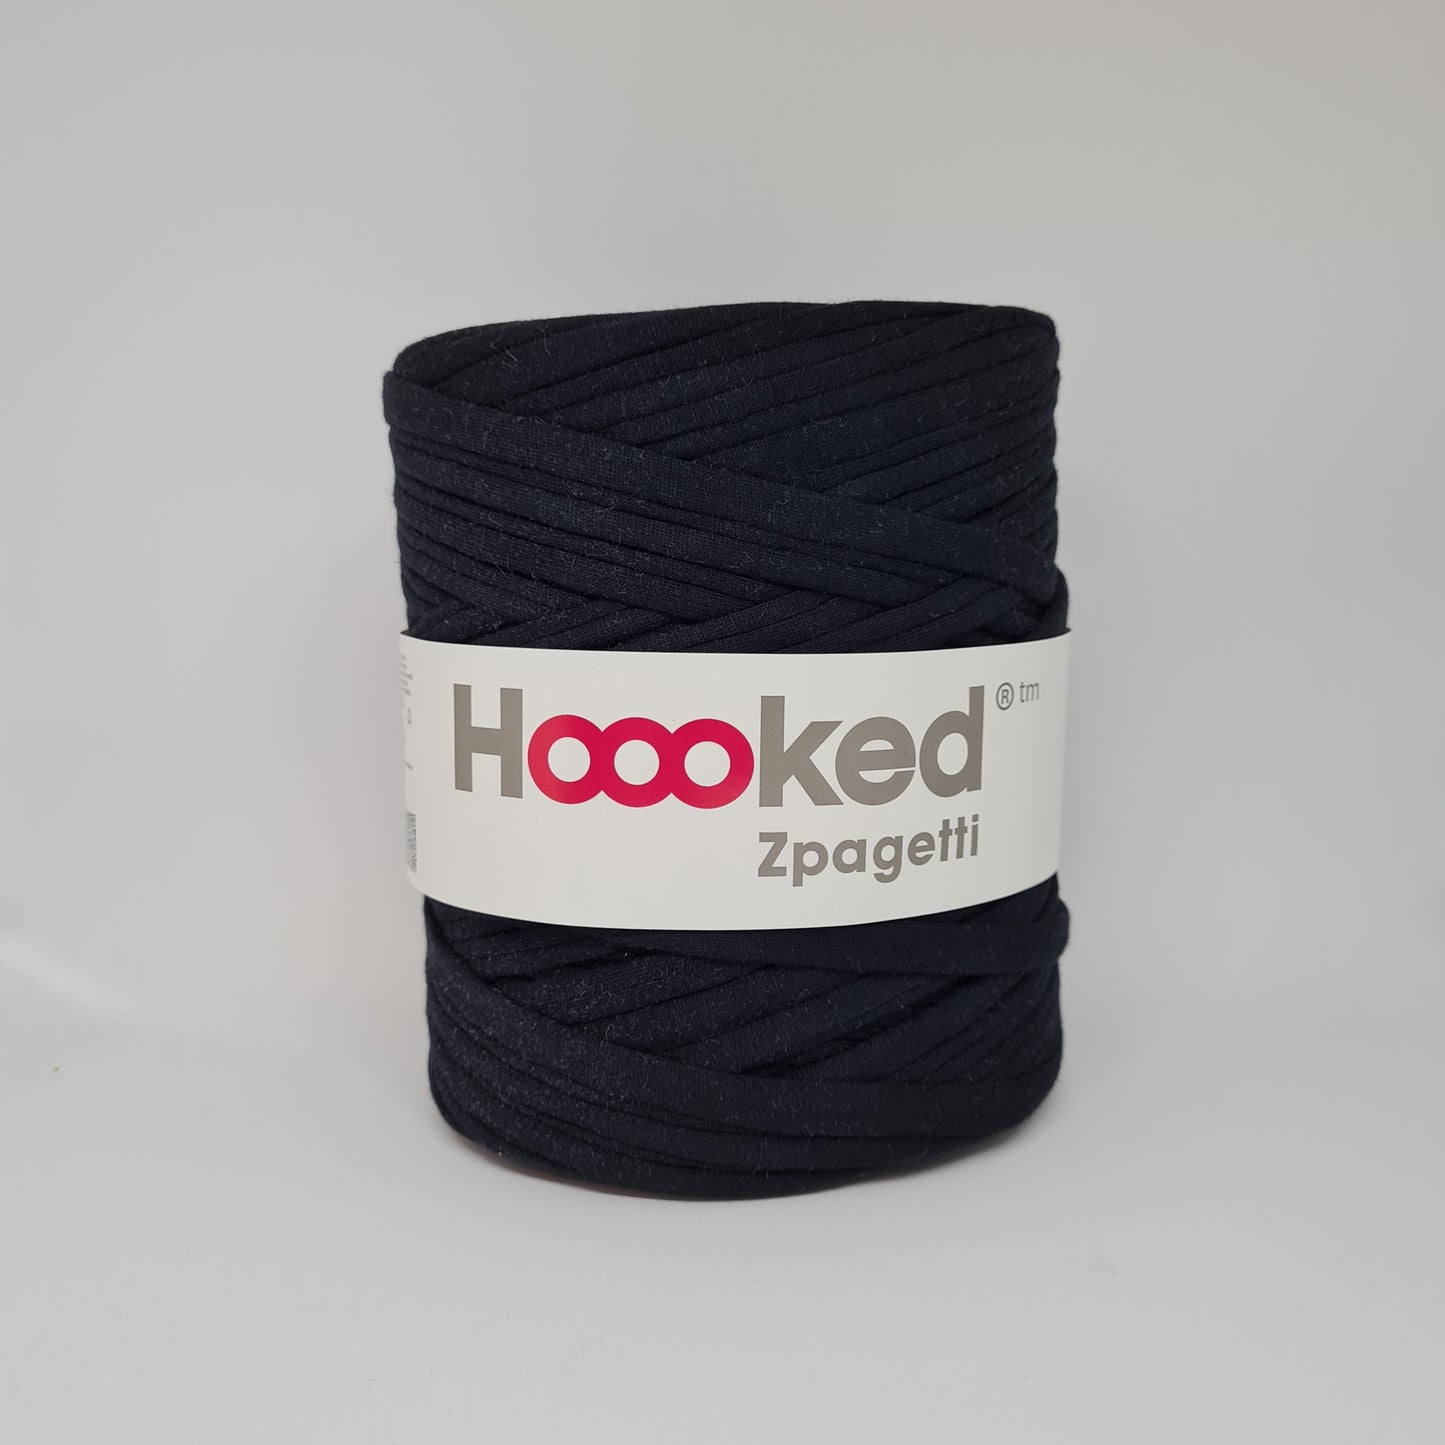 Original Hoooked Zpagetti T Shirt Yarn Black